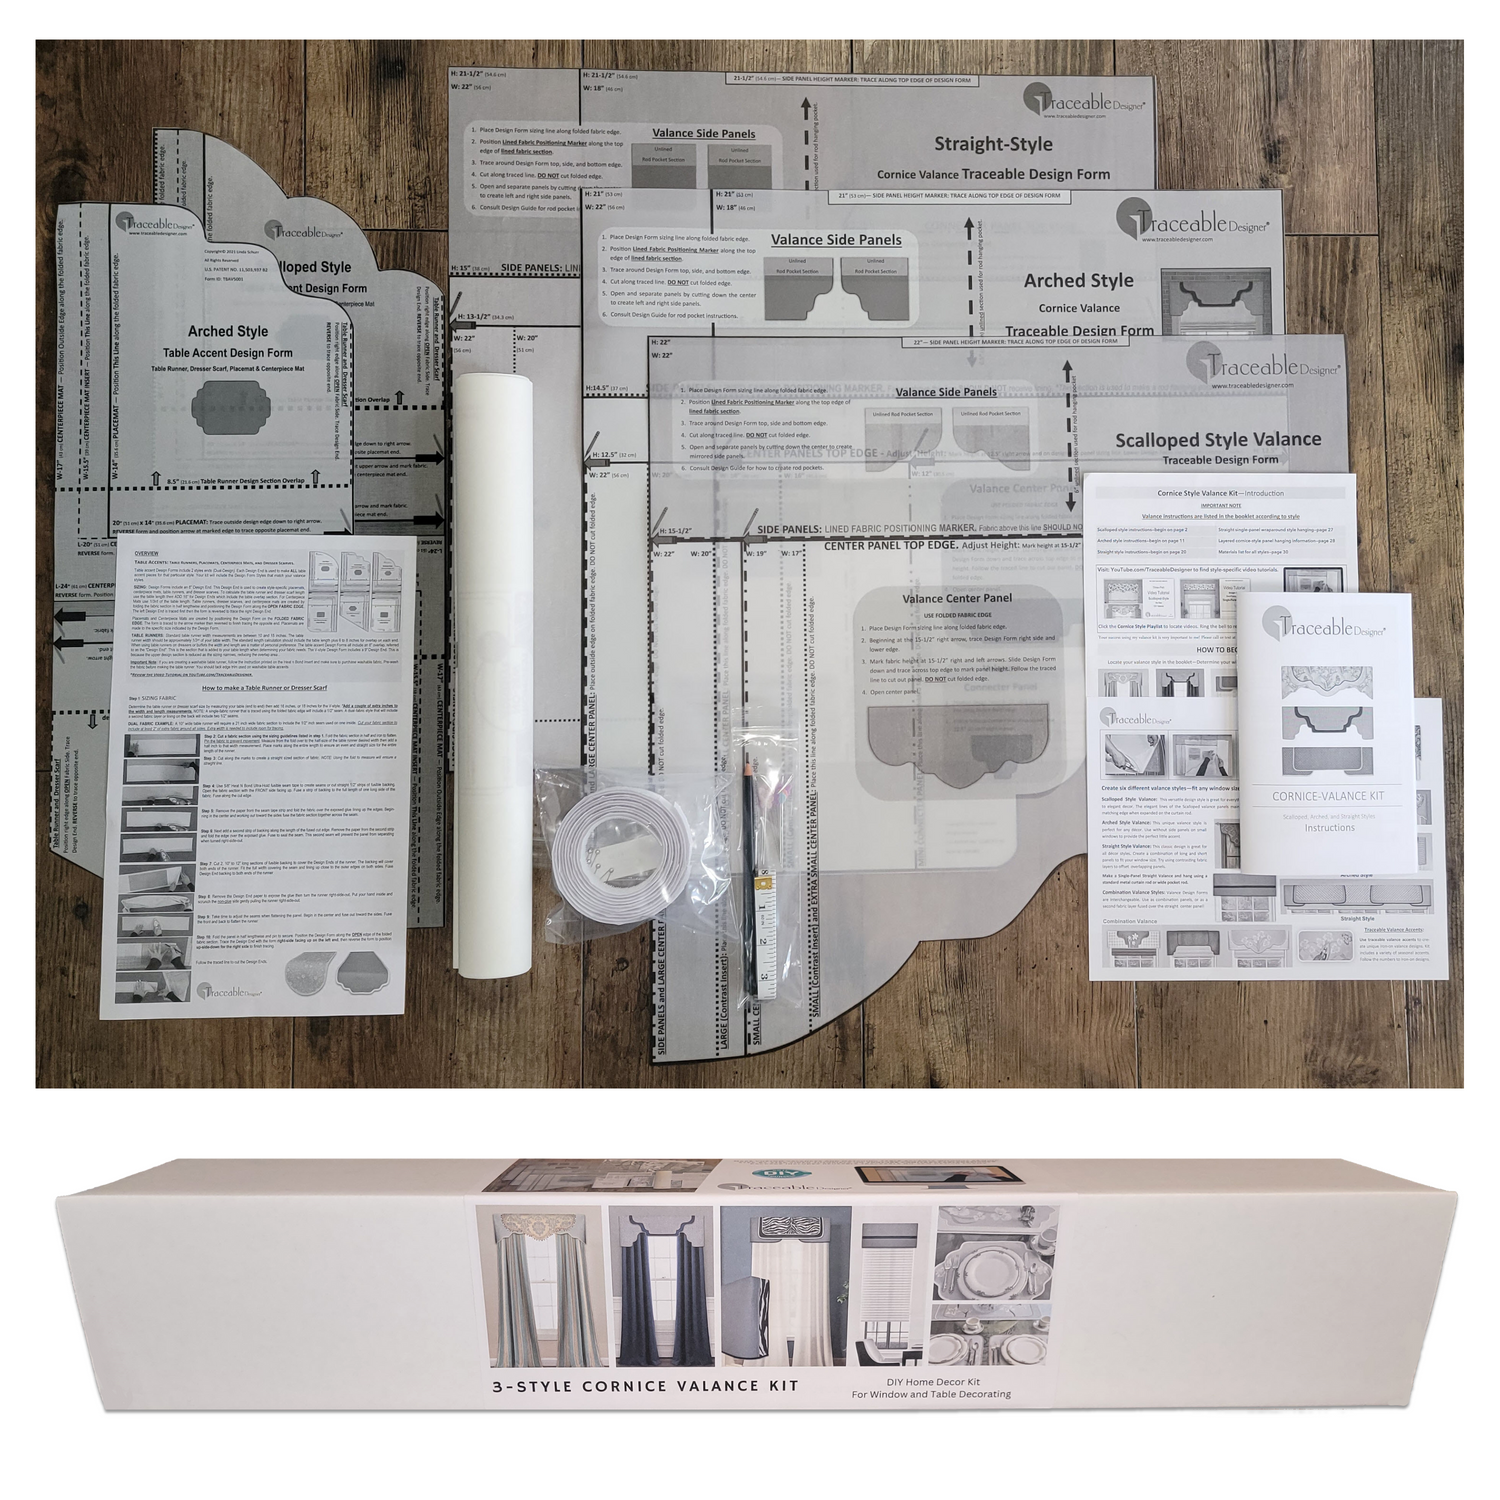 Traceable Designer multi-style cornice valance kit for DIY home decoraing